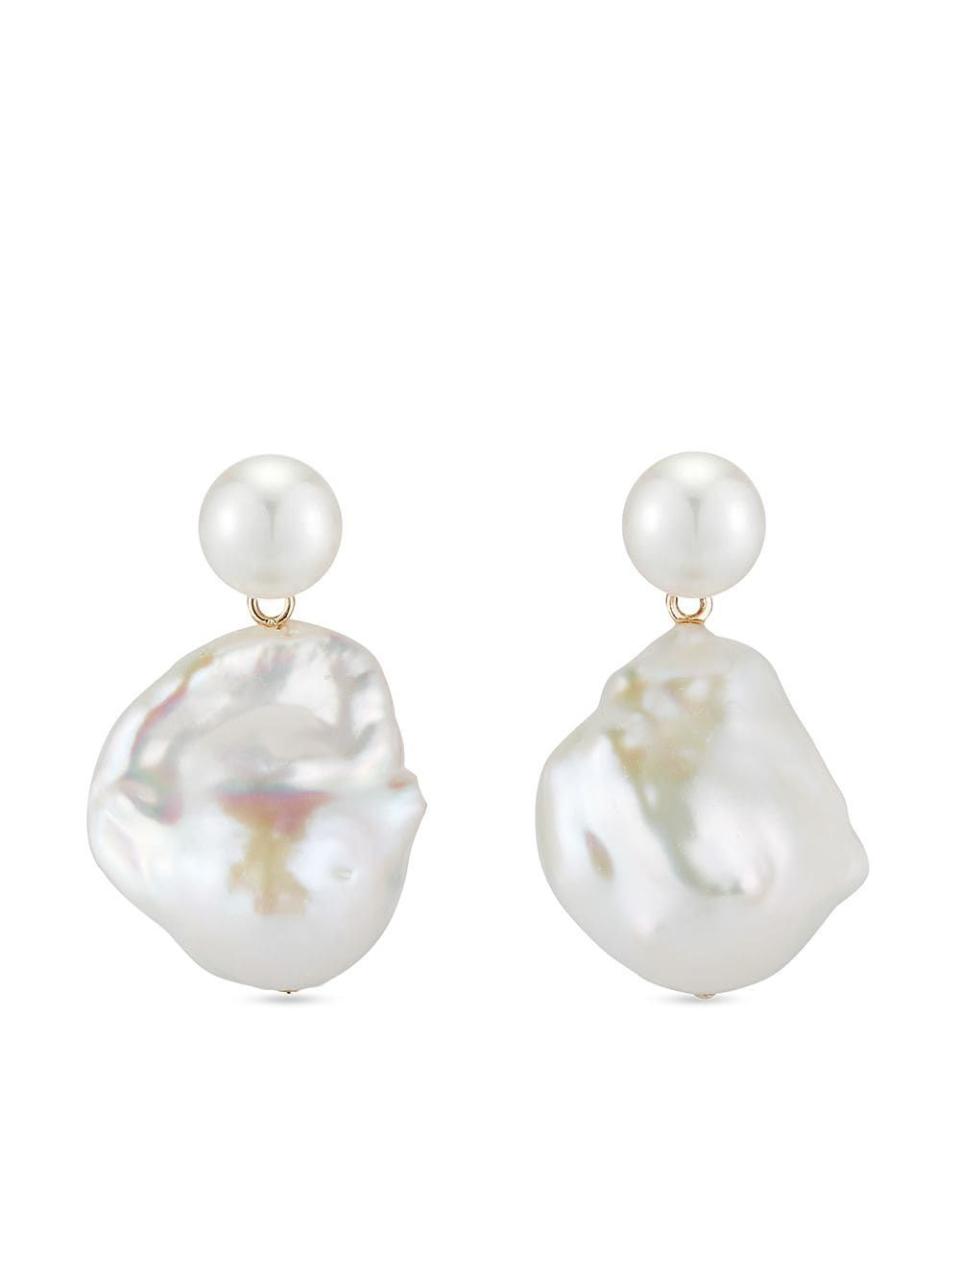 8) 14kt yellow gold Duality pearl drop earrings